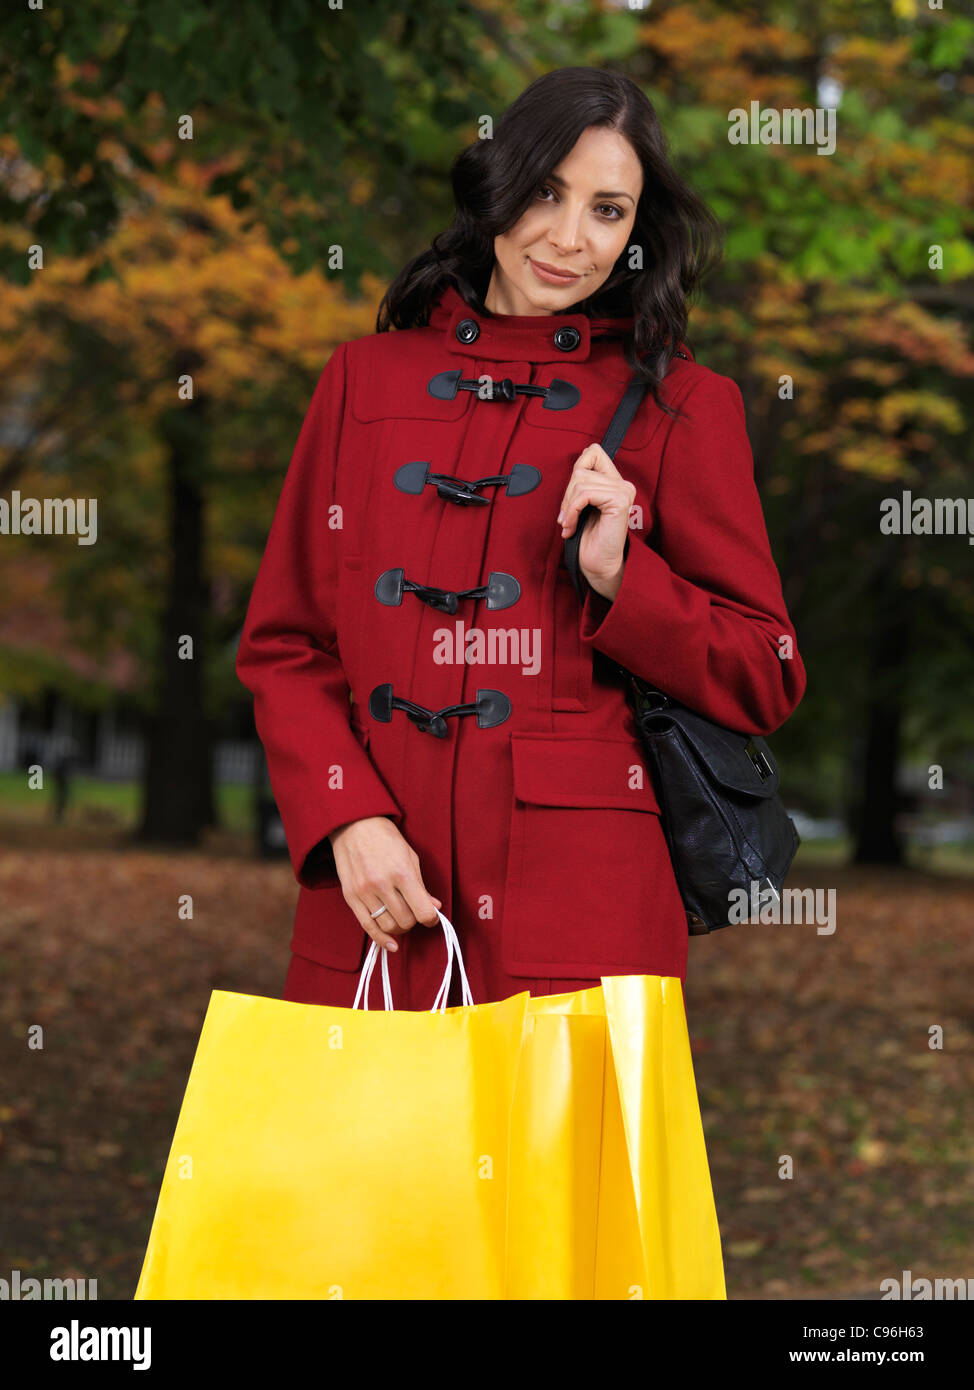 Young beautiful woman wearing a red coat and holding shopping bags. Fall season fashion. Stock Photo